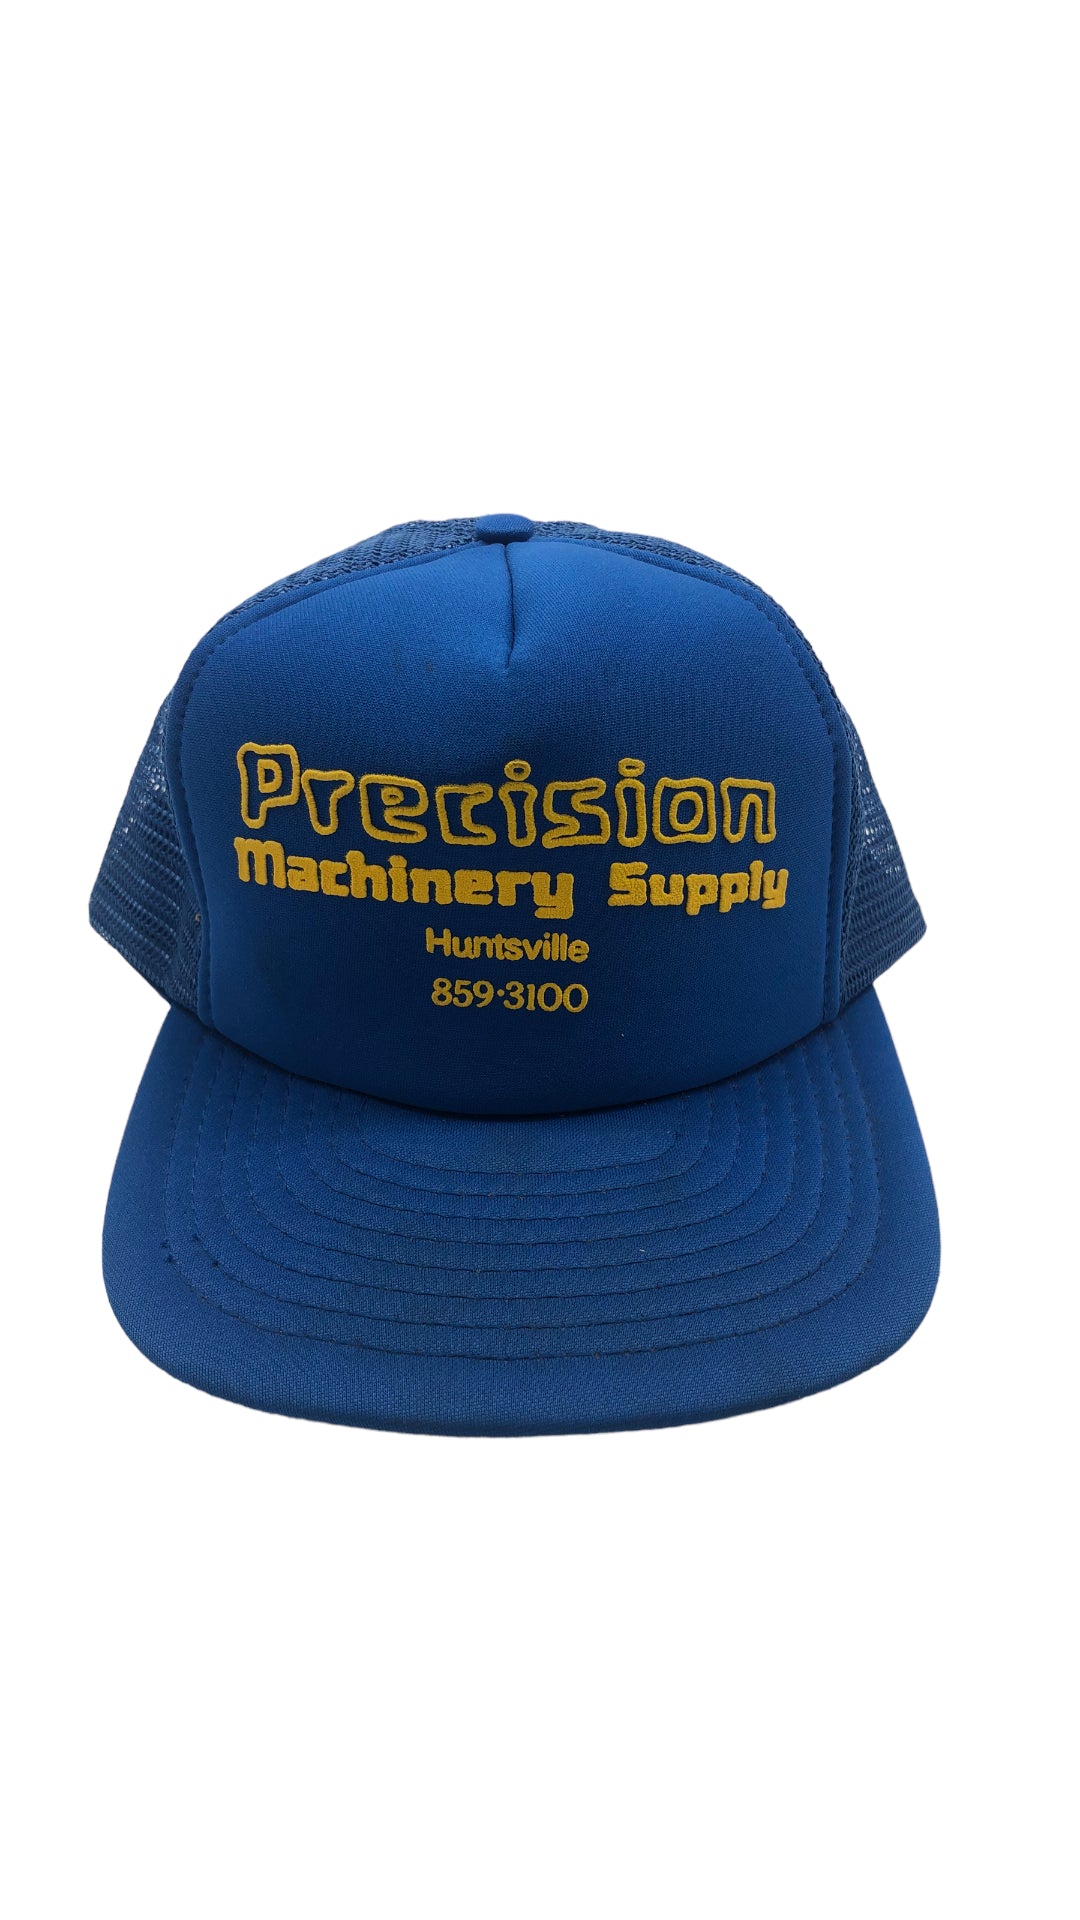 VTG Precision Machinery Supply Blue Trucker Hat